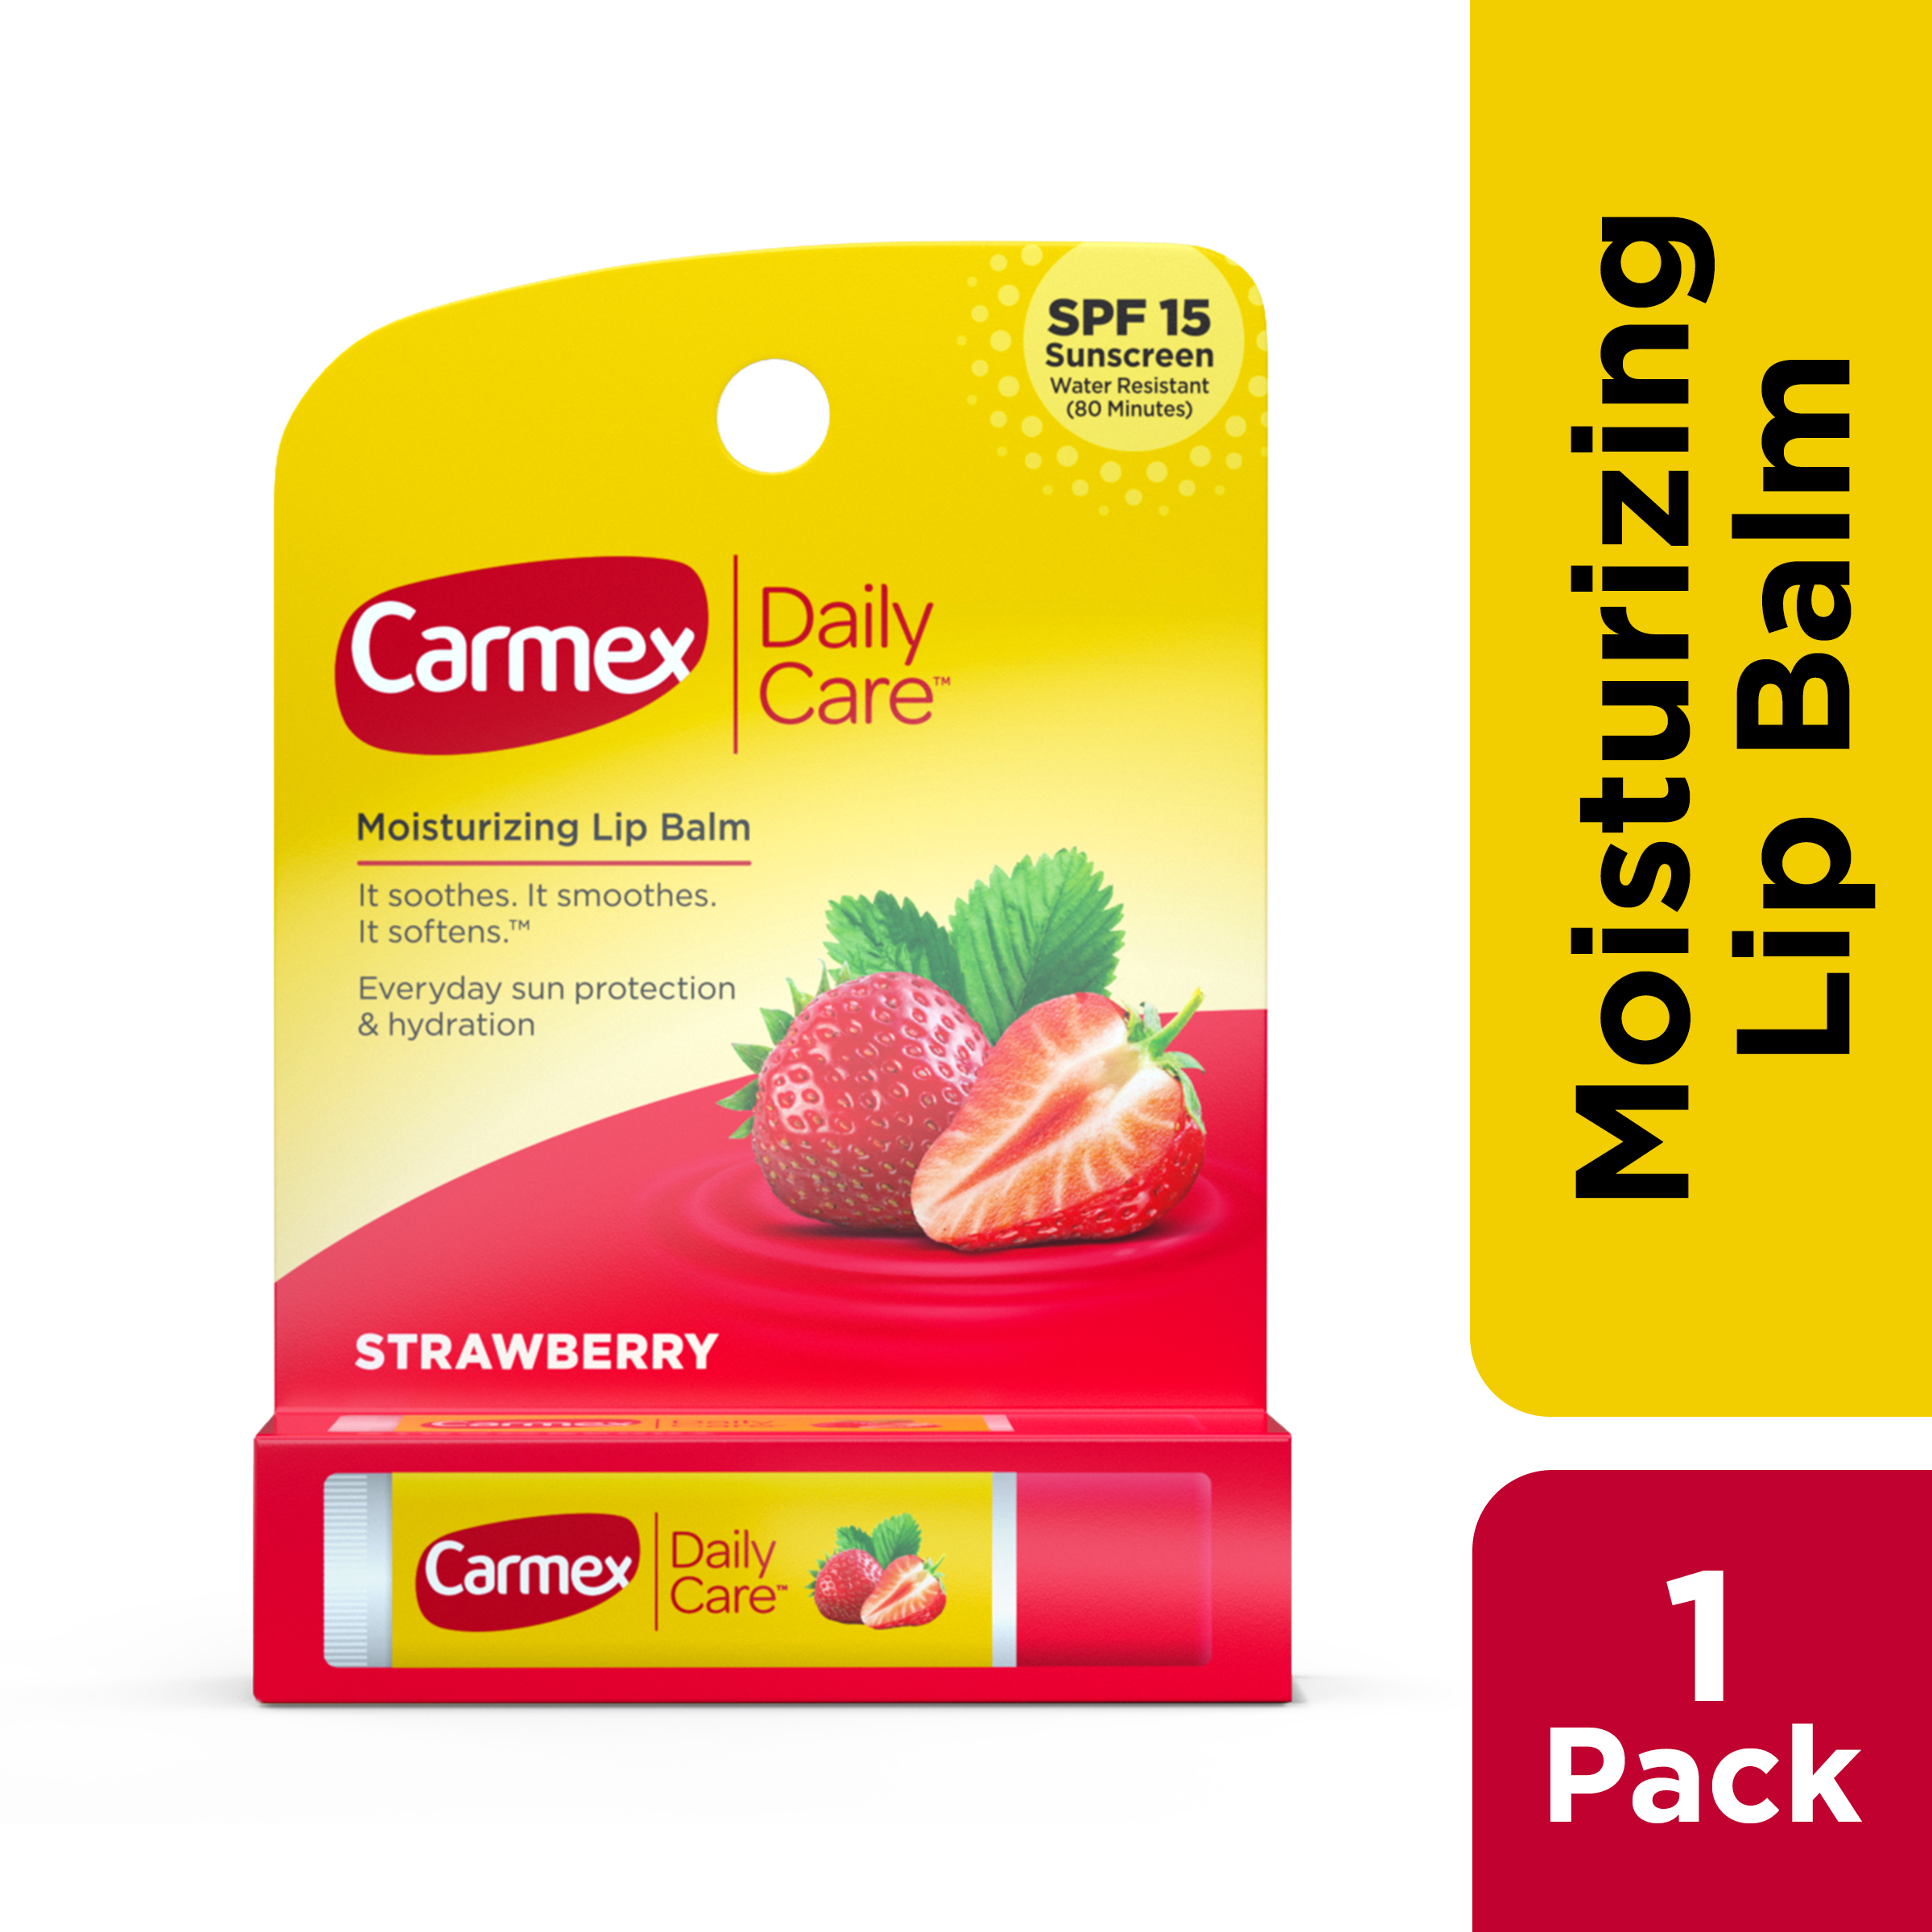 Carmex Daily Care Moisturizing Lip Balm Stick, SPF 15, Strawberry Lip Balm Flavor, 1 Count - image 1 of 9